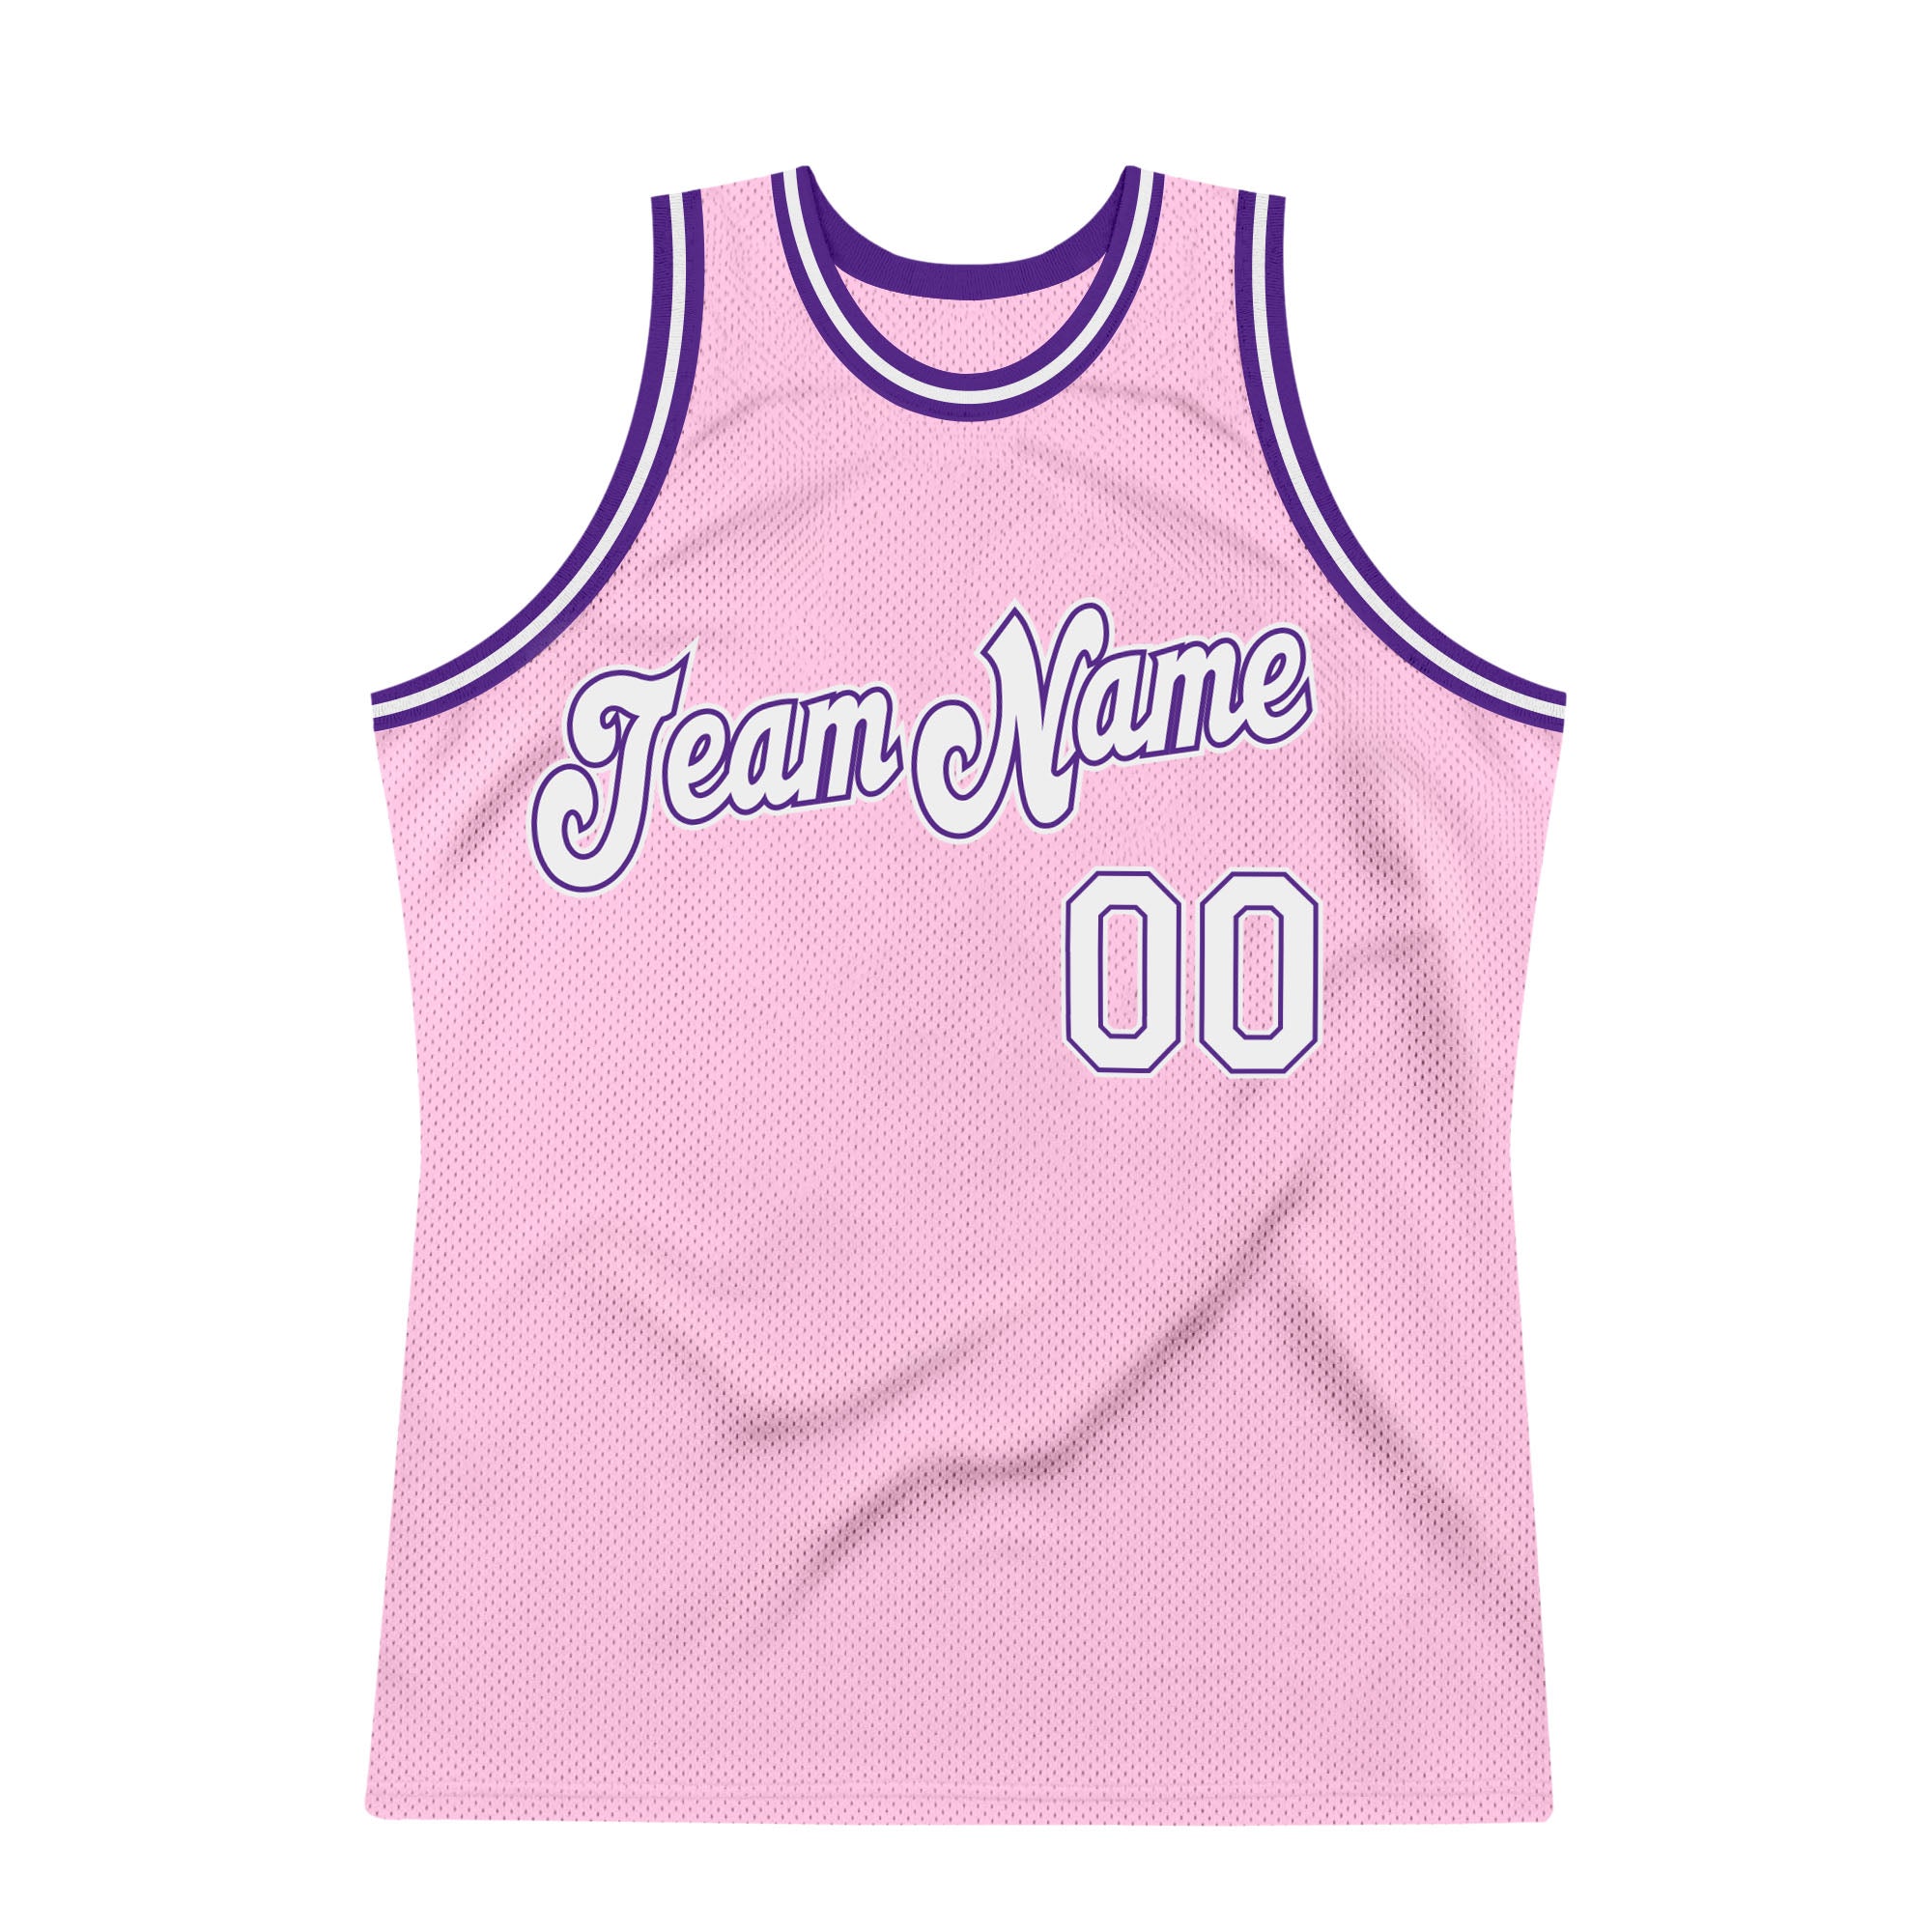 Cheap Custom Light Pink White-Purple Authentic Throwback Basketball Jersey  Free Shipping – CustomJerseysPro